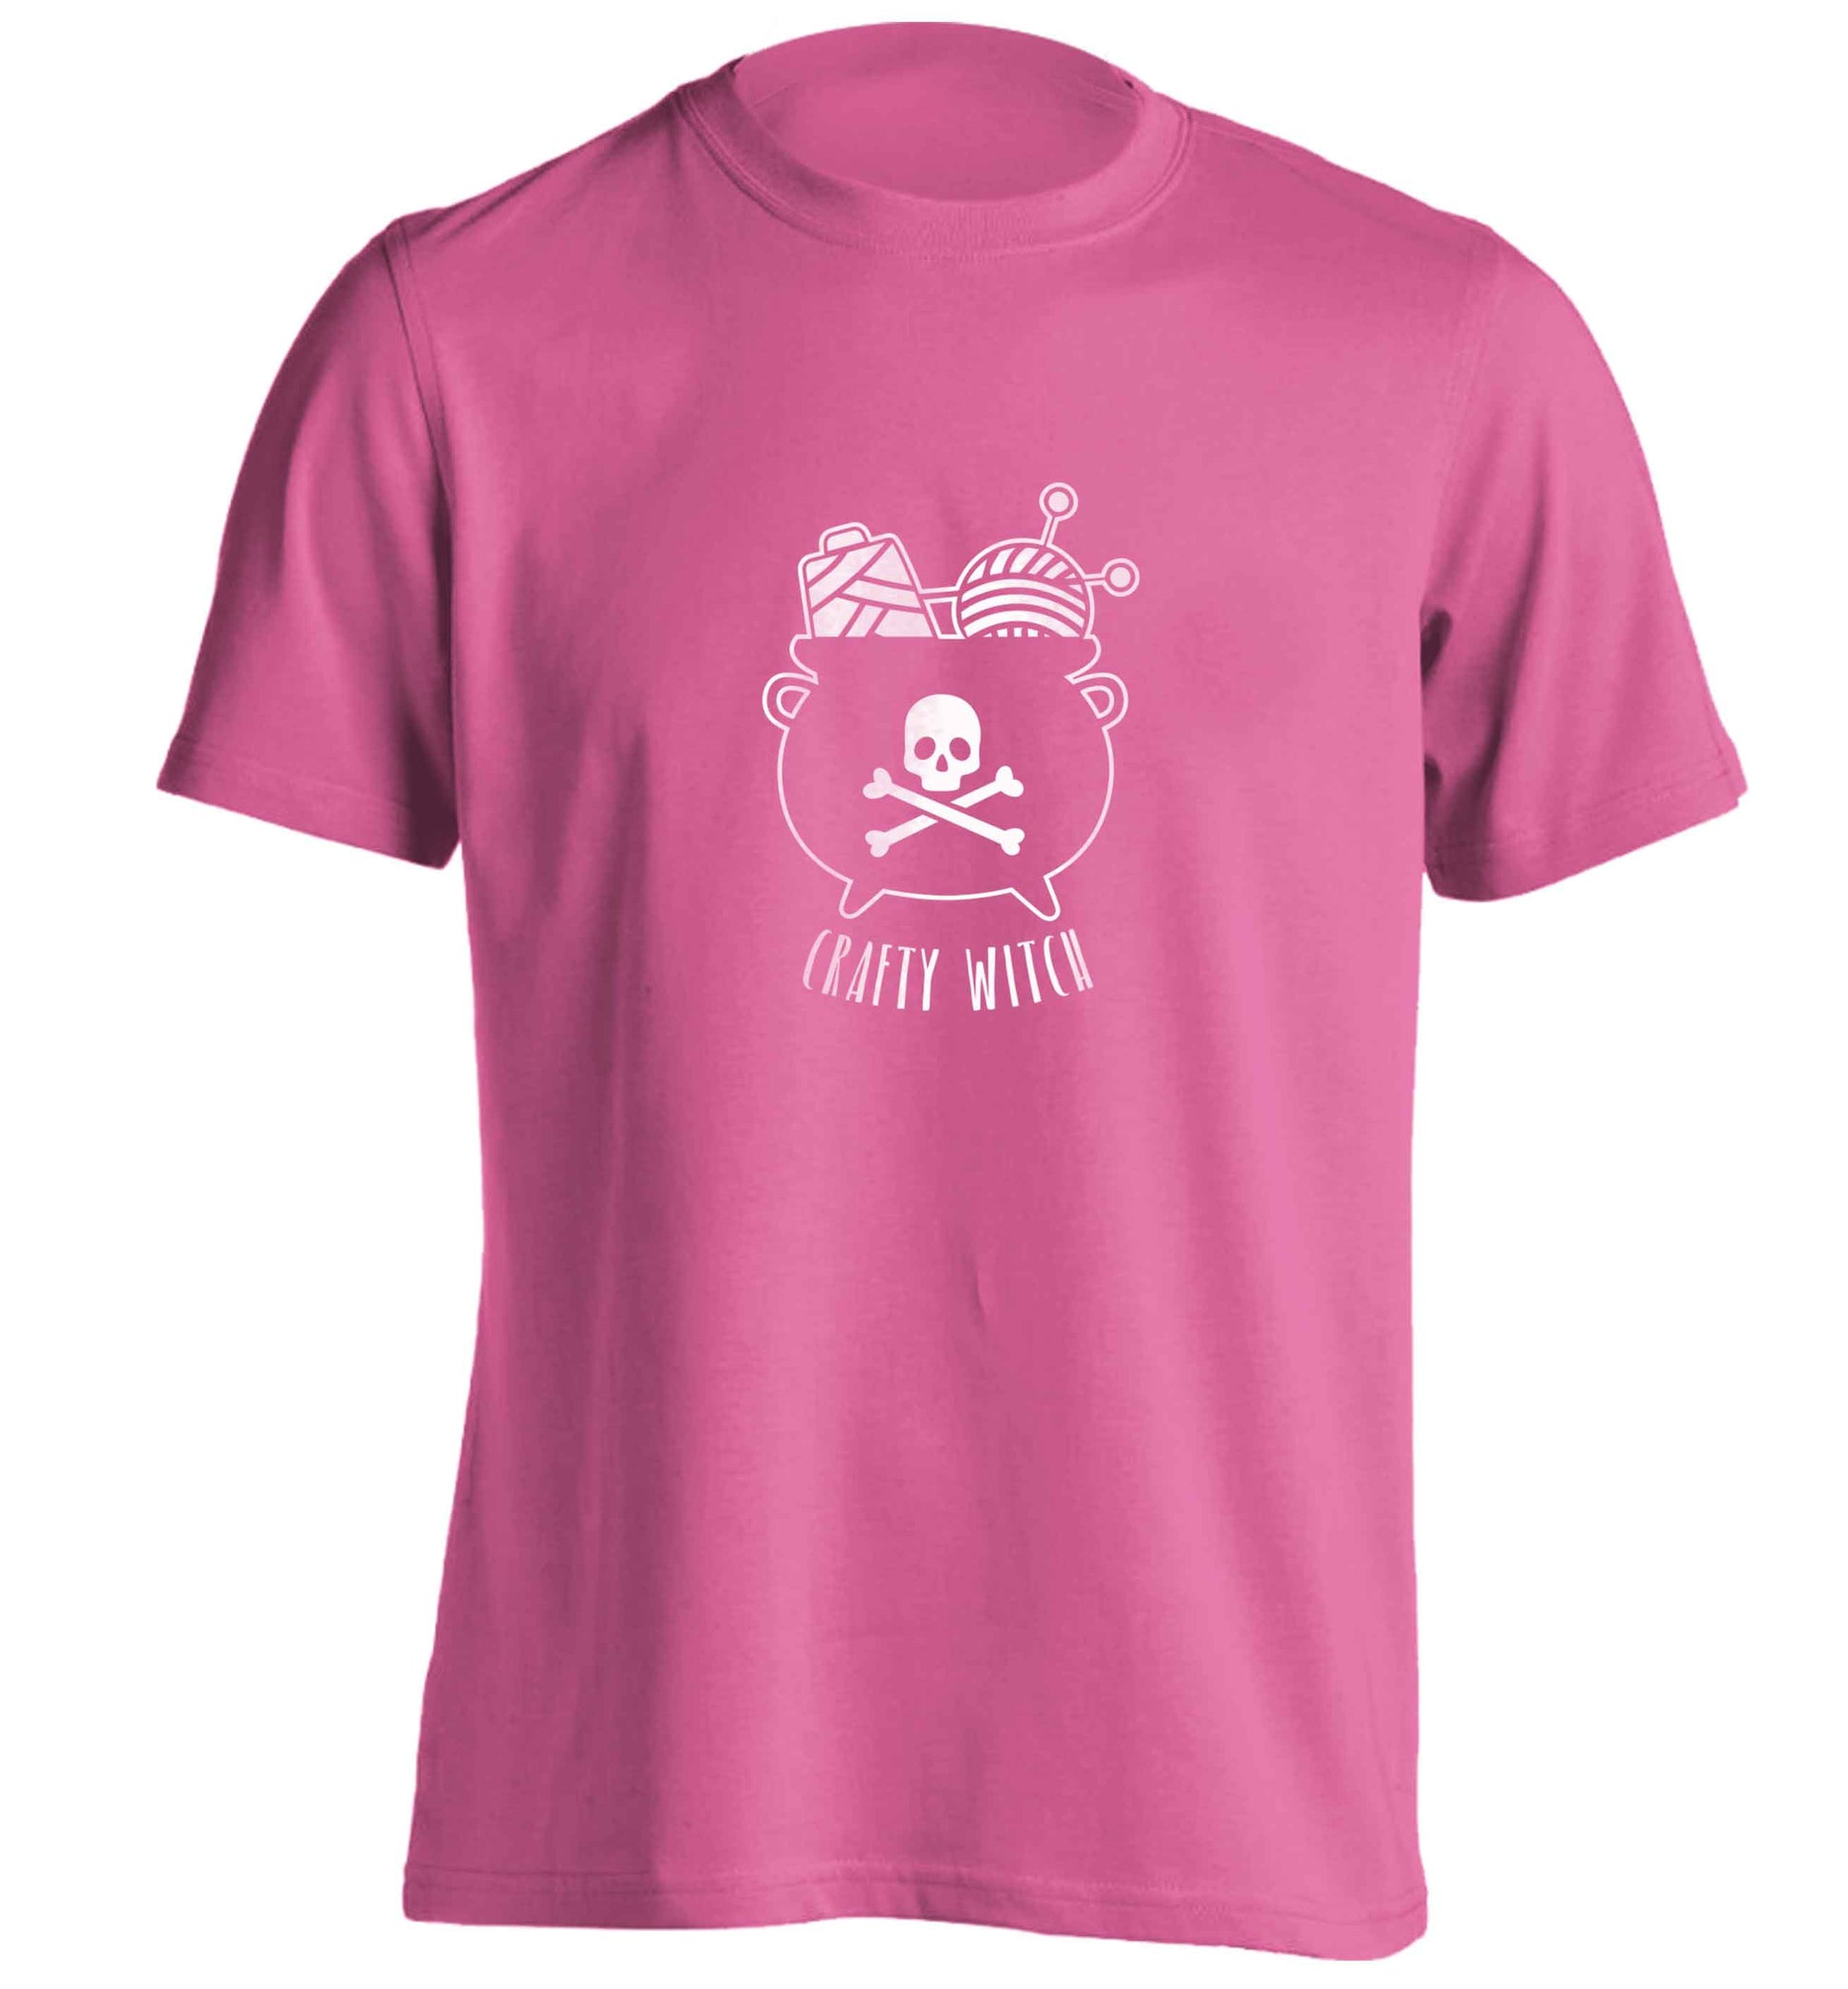 Crafty witch adults unisex pink Tshirt 2XL